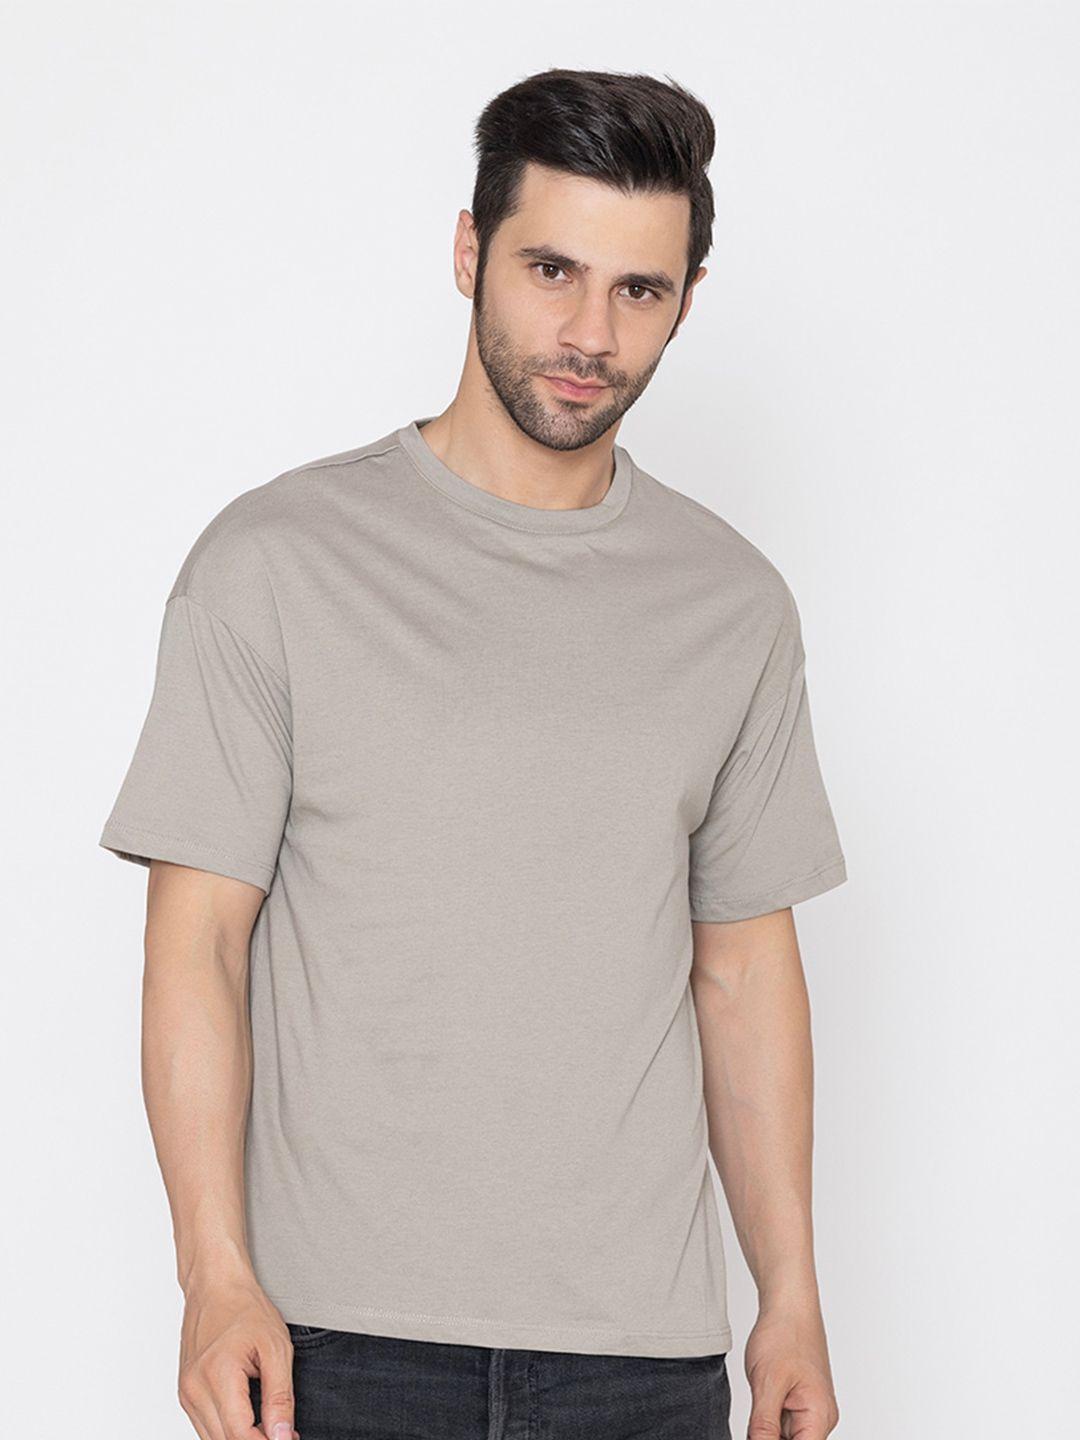 tittli round neck drop-shoulder sleeves oversized pure cotton t-shirt